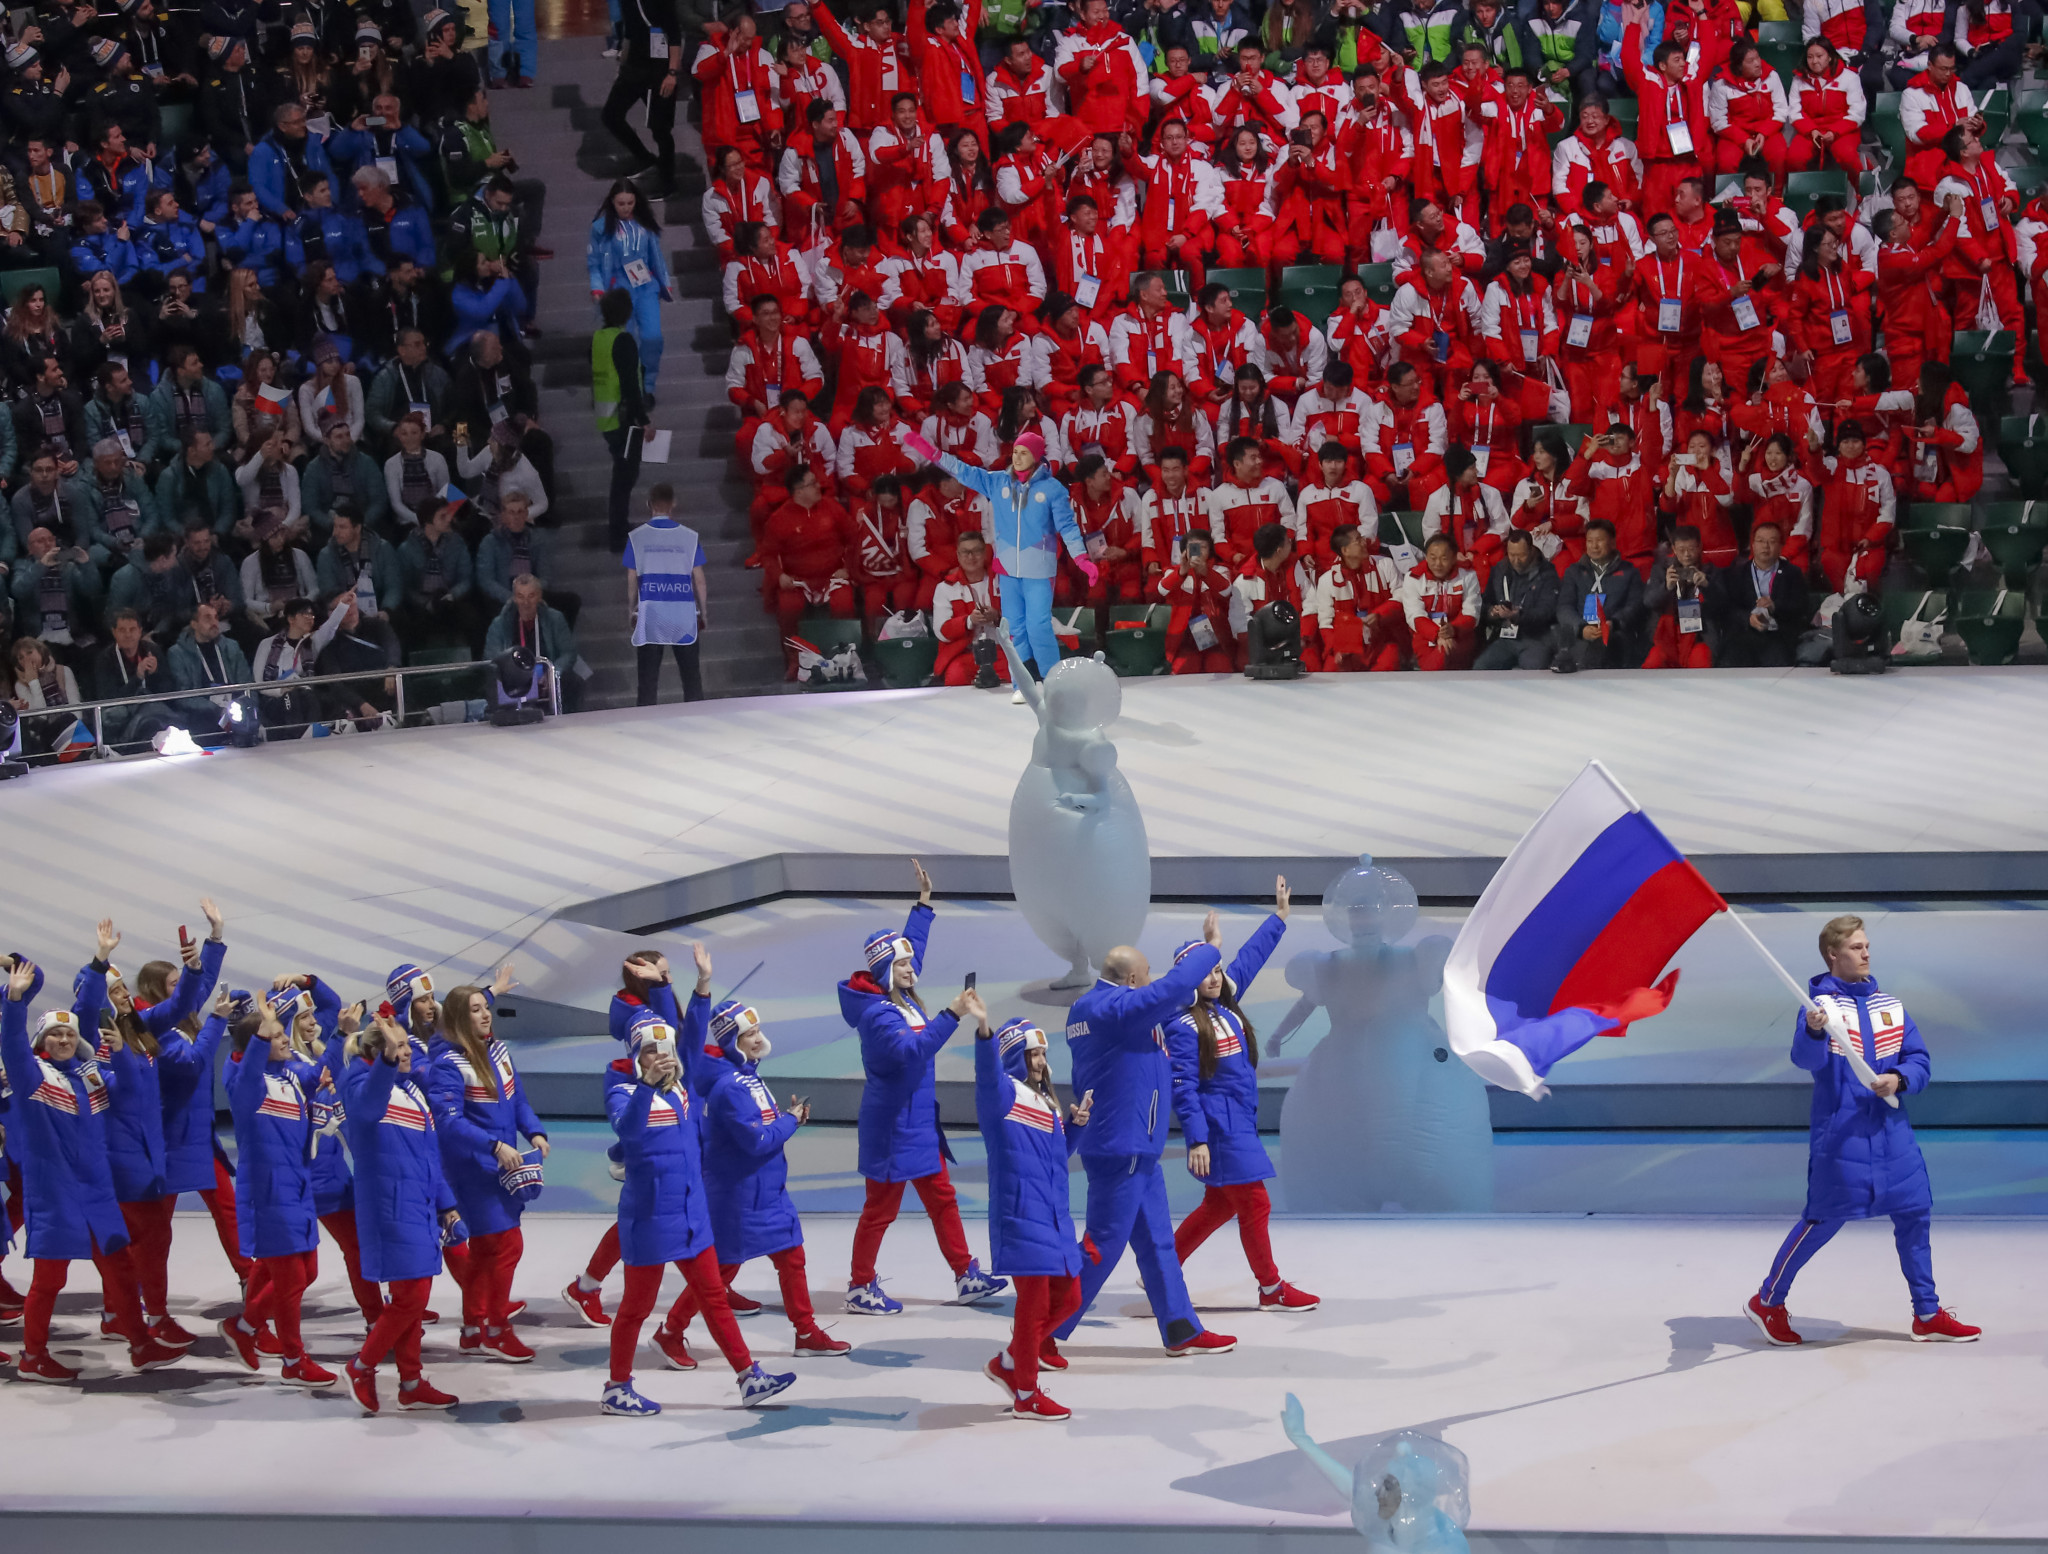 Krasnoyarsk 2019: Opening Ceremony of Winter Universiade